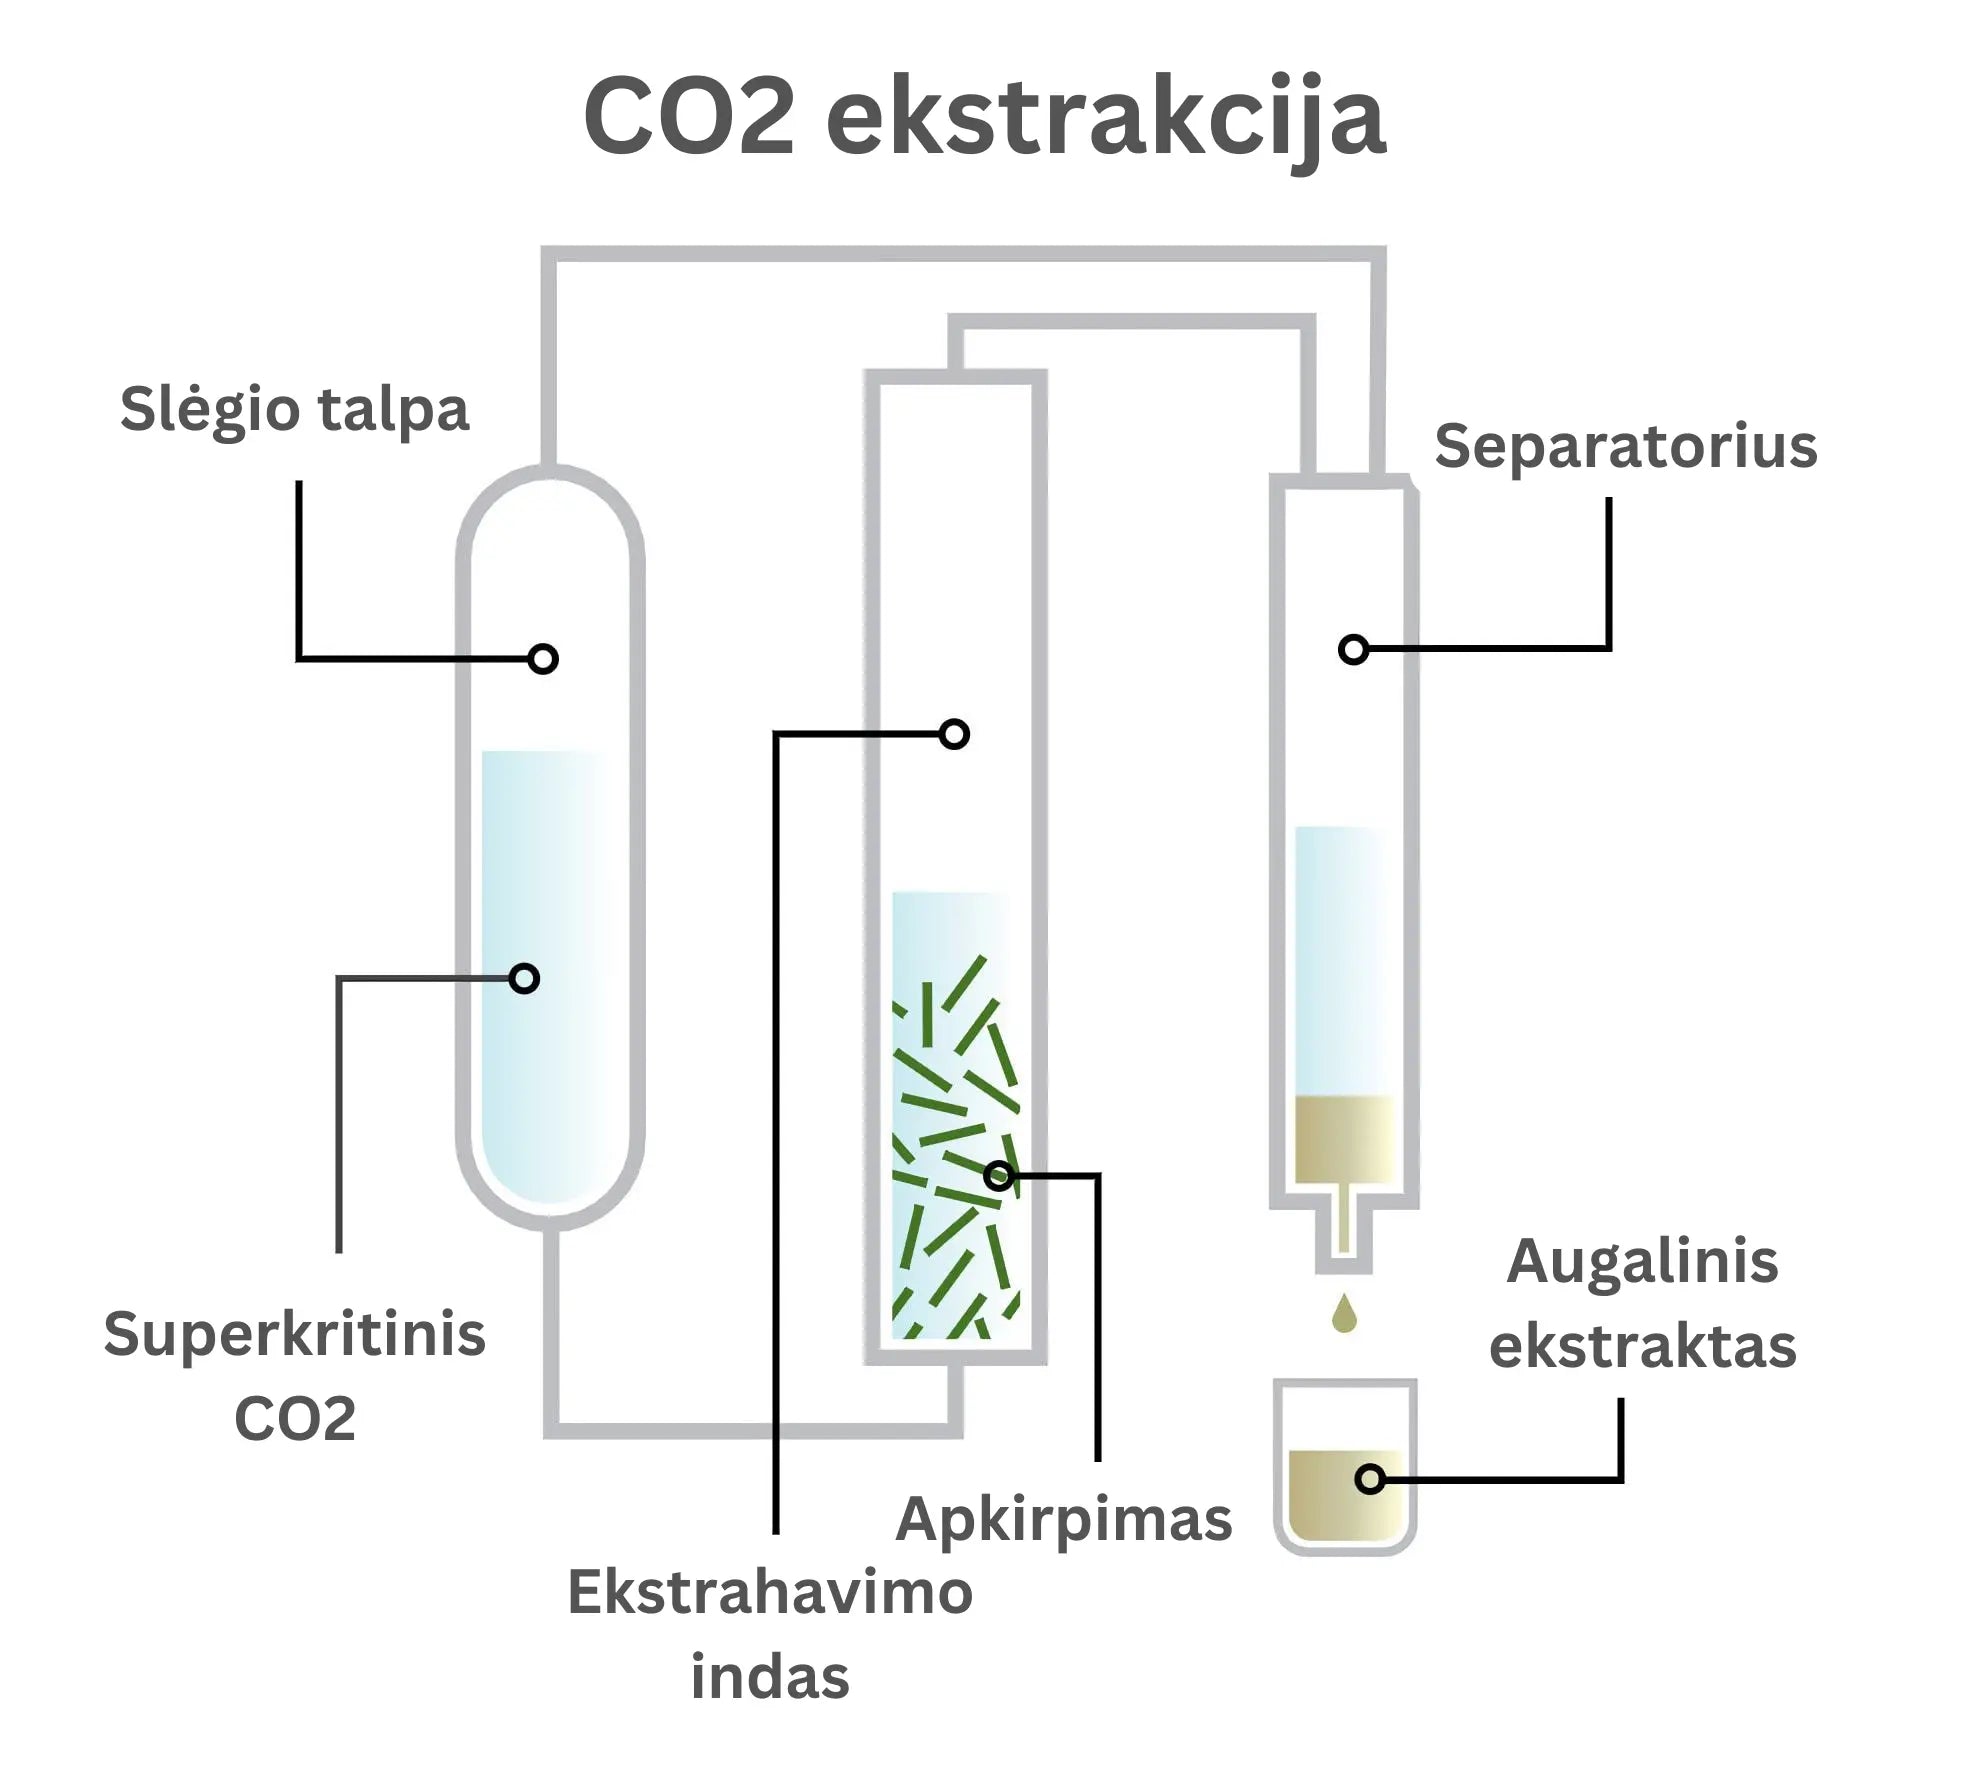 CO2 ekstrakcija